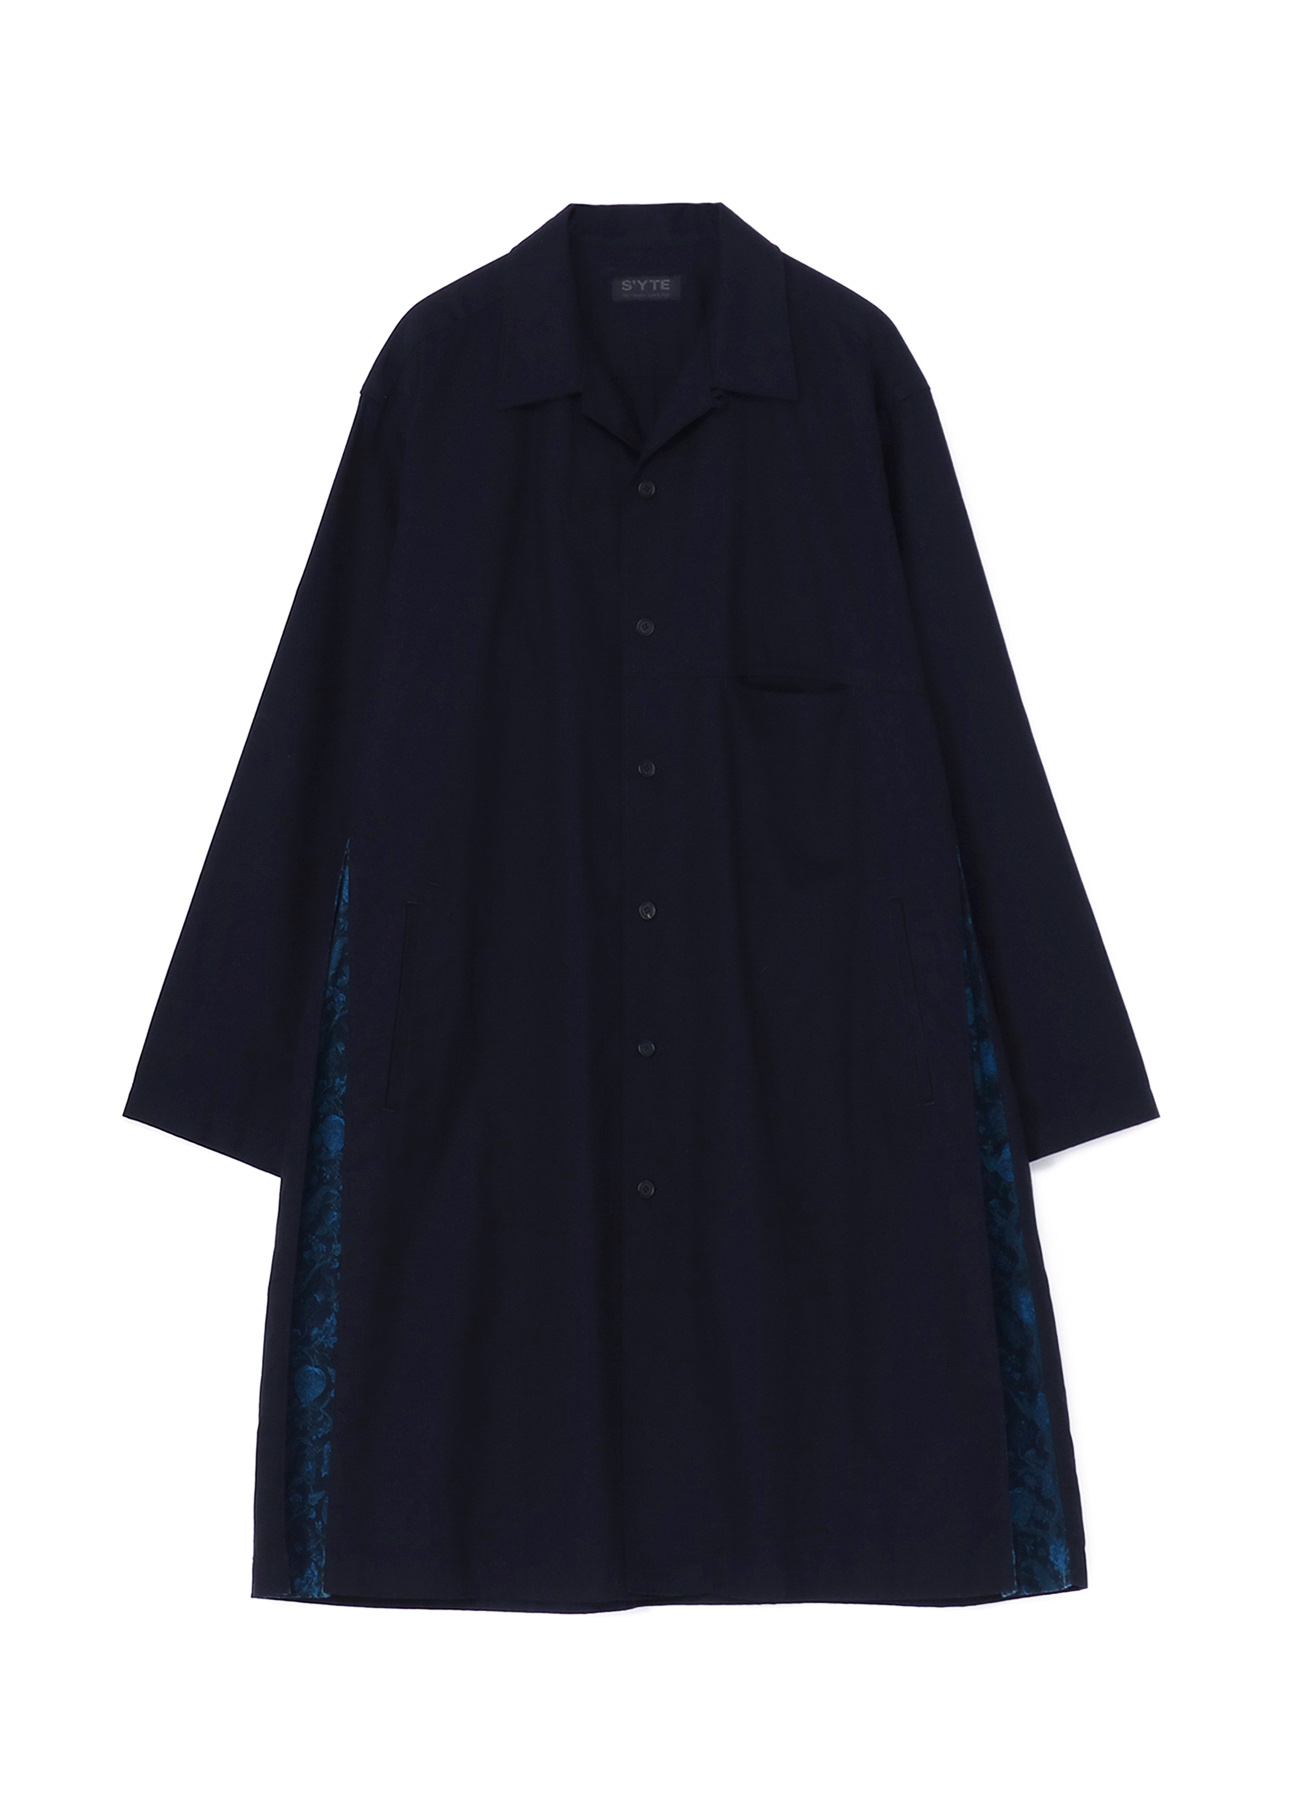 Thorny Pattern Jacquard Gusseted Hem Katsuragi Long Shirt